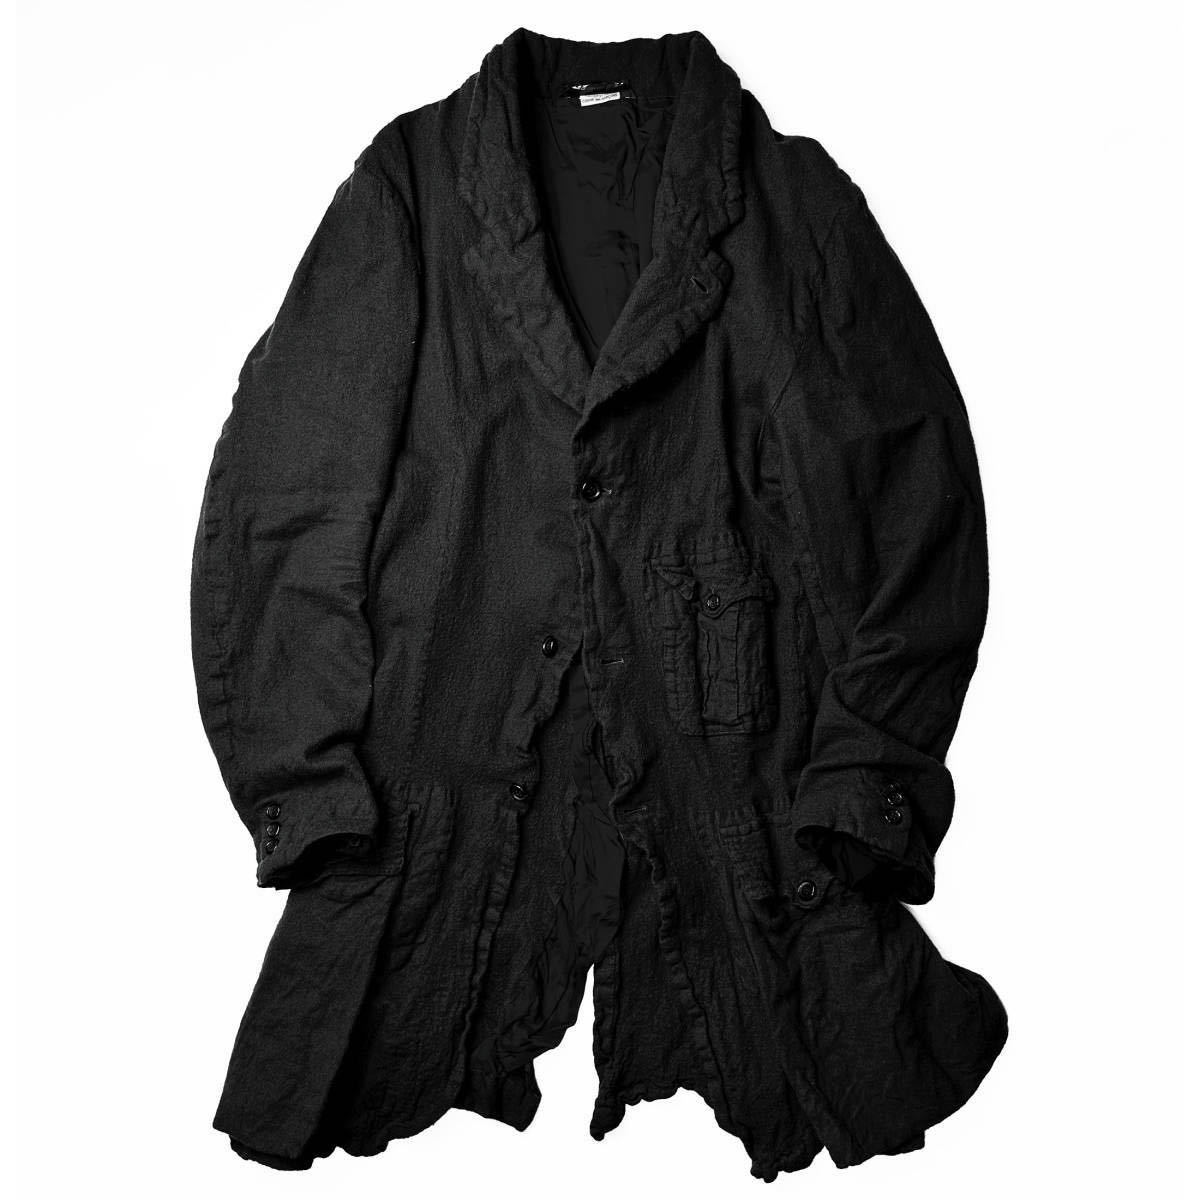 94AW переиздание шерсть .. длинный cargo жакет Comme des Garcons BLACK 20AW 2020AW Boiled Wool Jacket HOMME PLUS Homme pryus1994AW